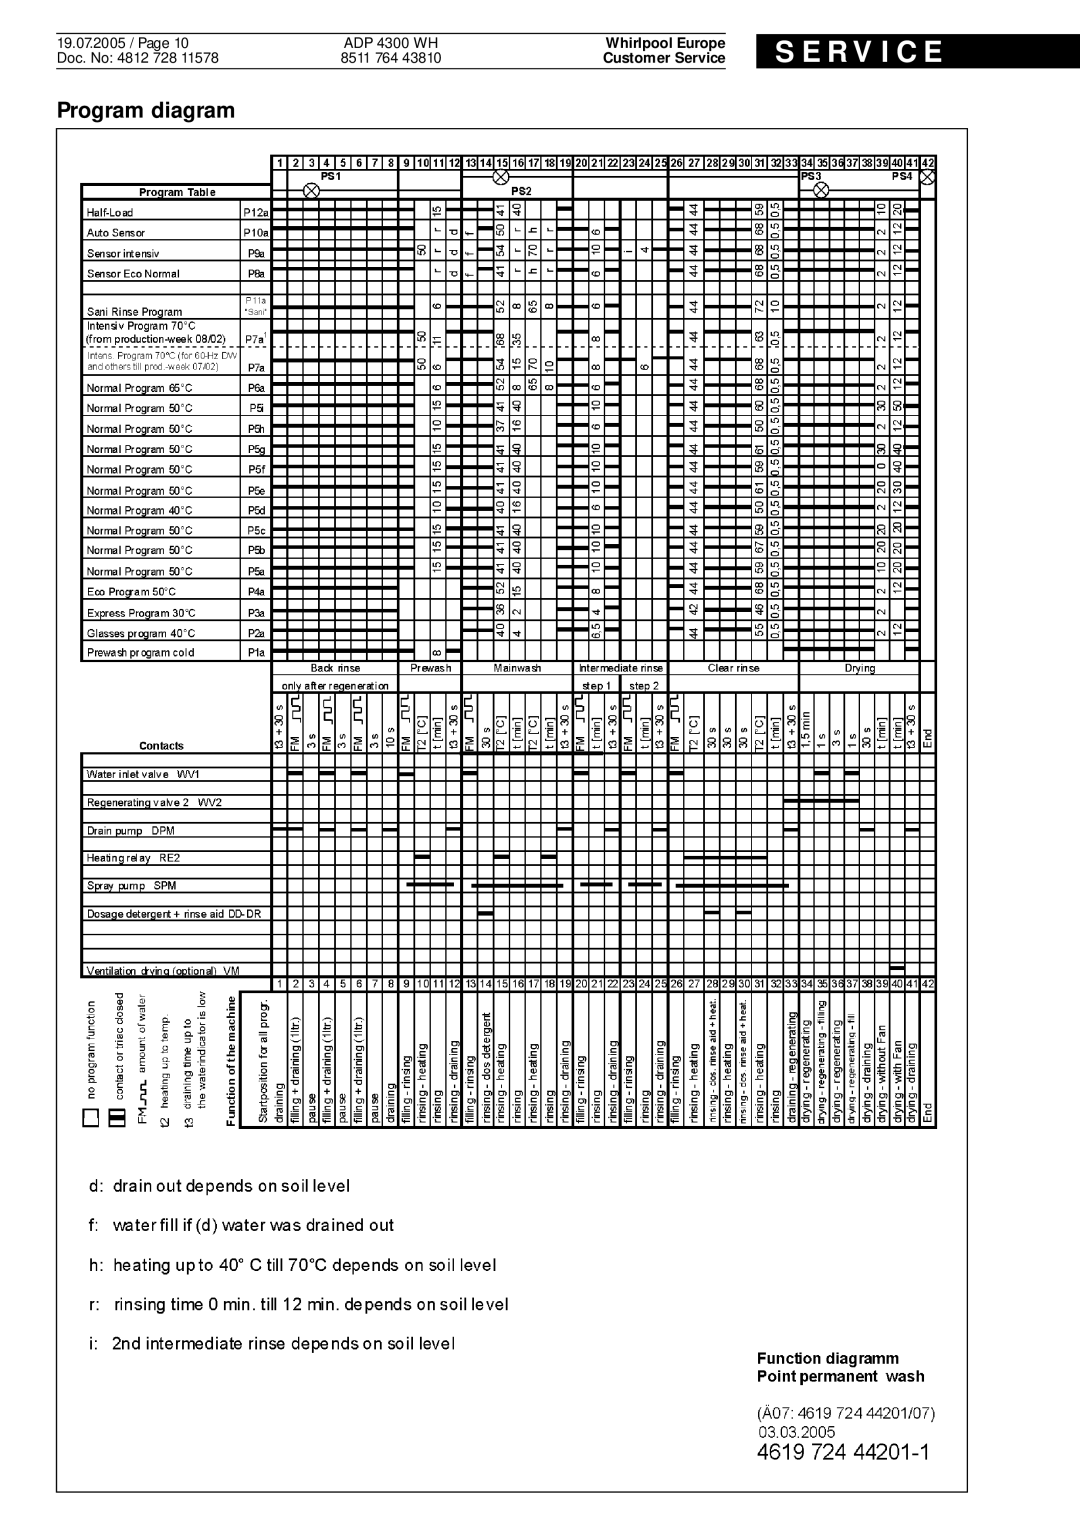 Whirlpool ADP 4300 WH service manual Program diagram, S E R V I C E, Whirlpool Europe, Customer Service 